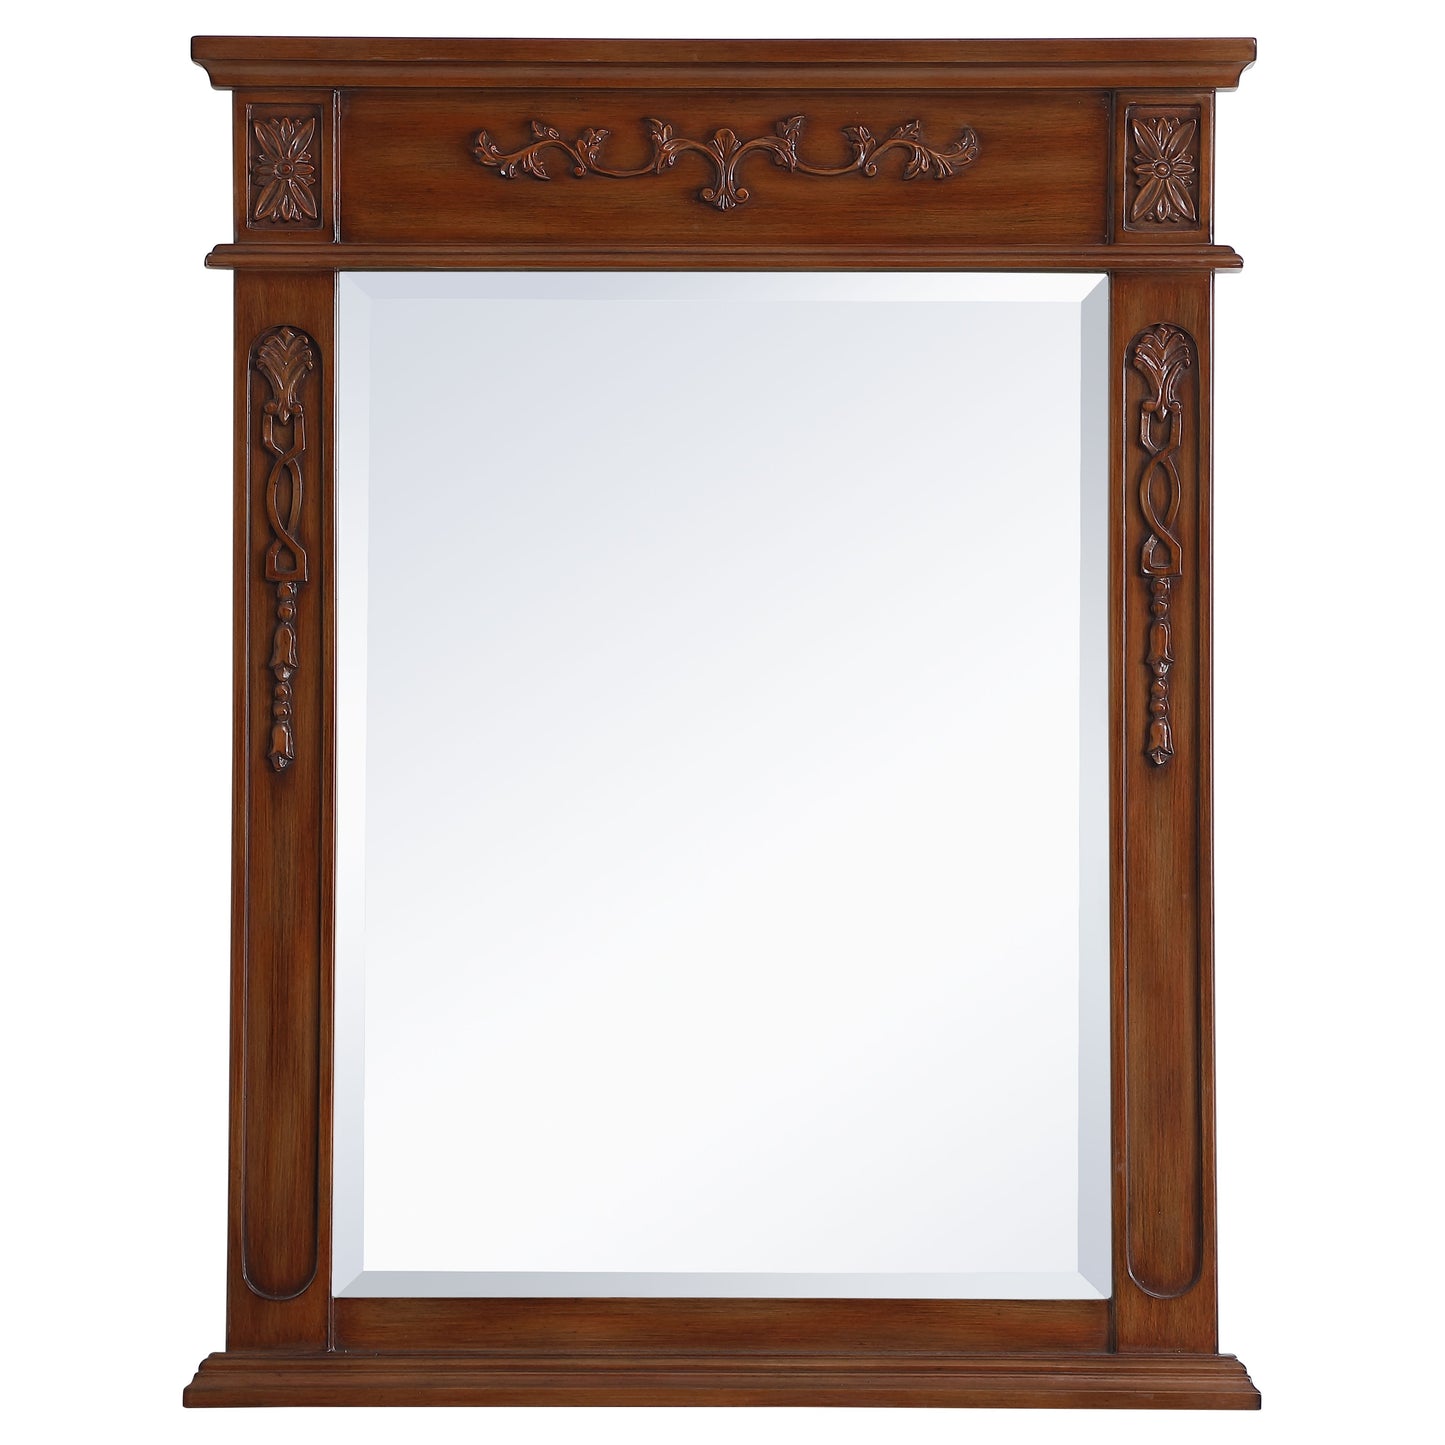 VM12836TK Danville 28" x 36" Wood Framed Decorative Mirror in Teak